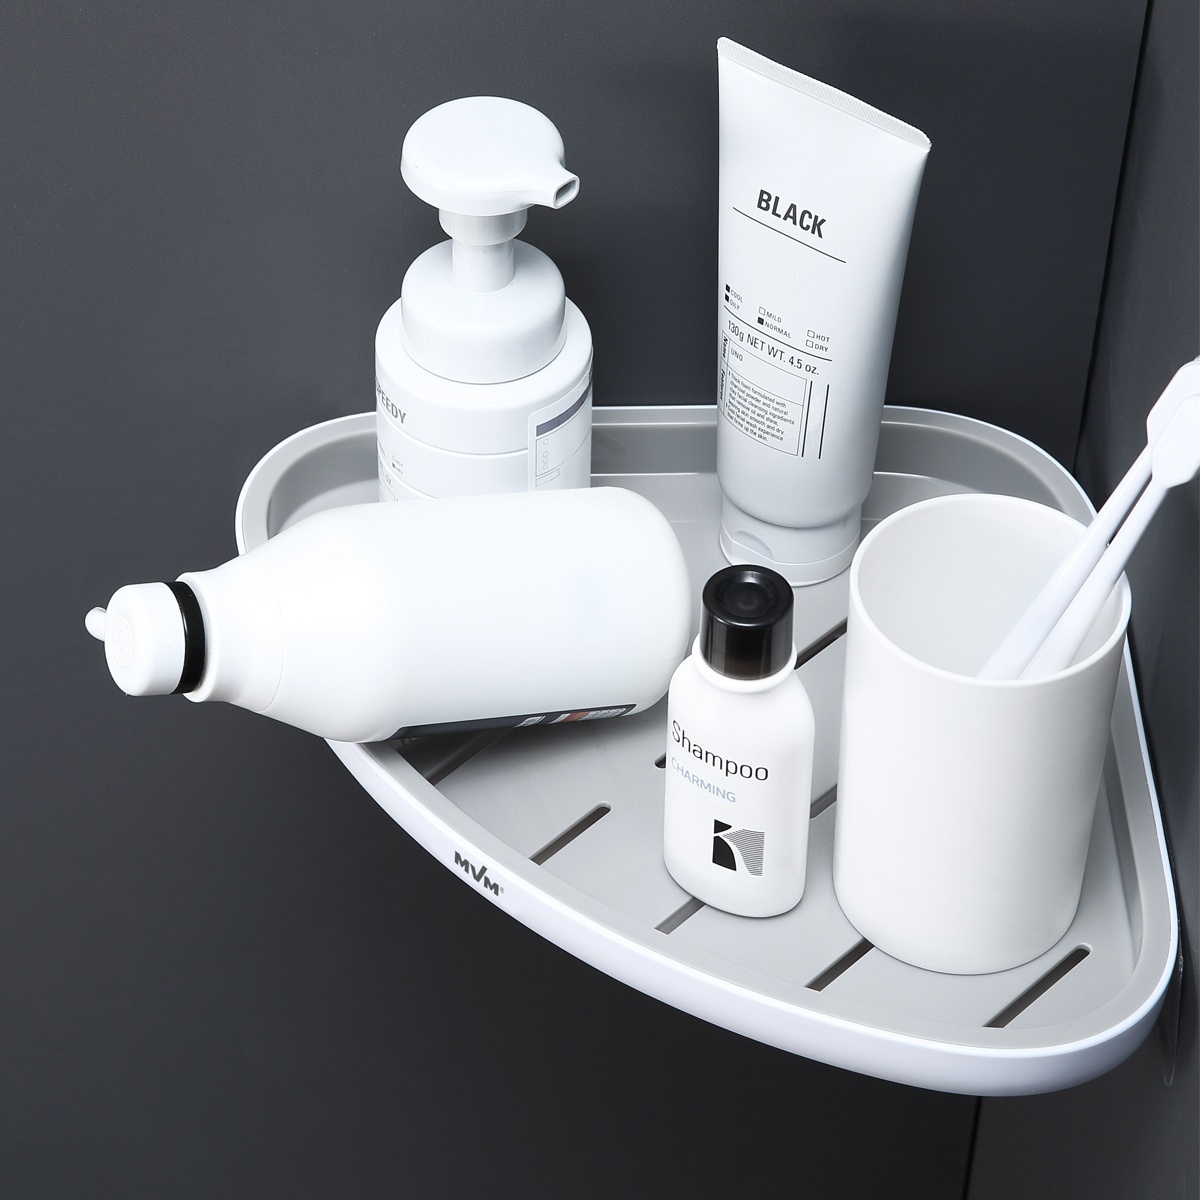 Набор аксессуаров для ванной MVM №8 округлый пластиковый серый MVM-MH-08 white/gray